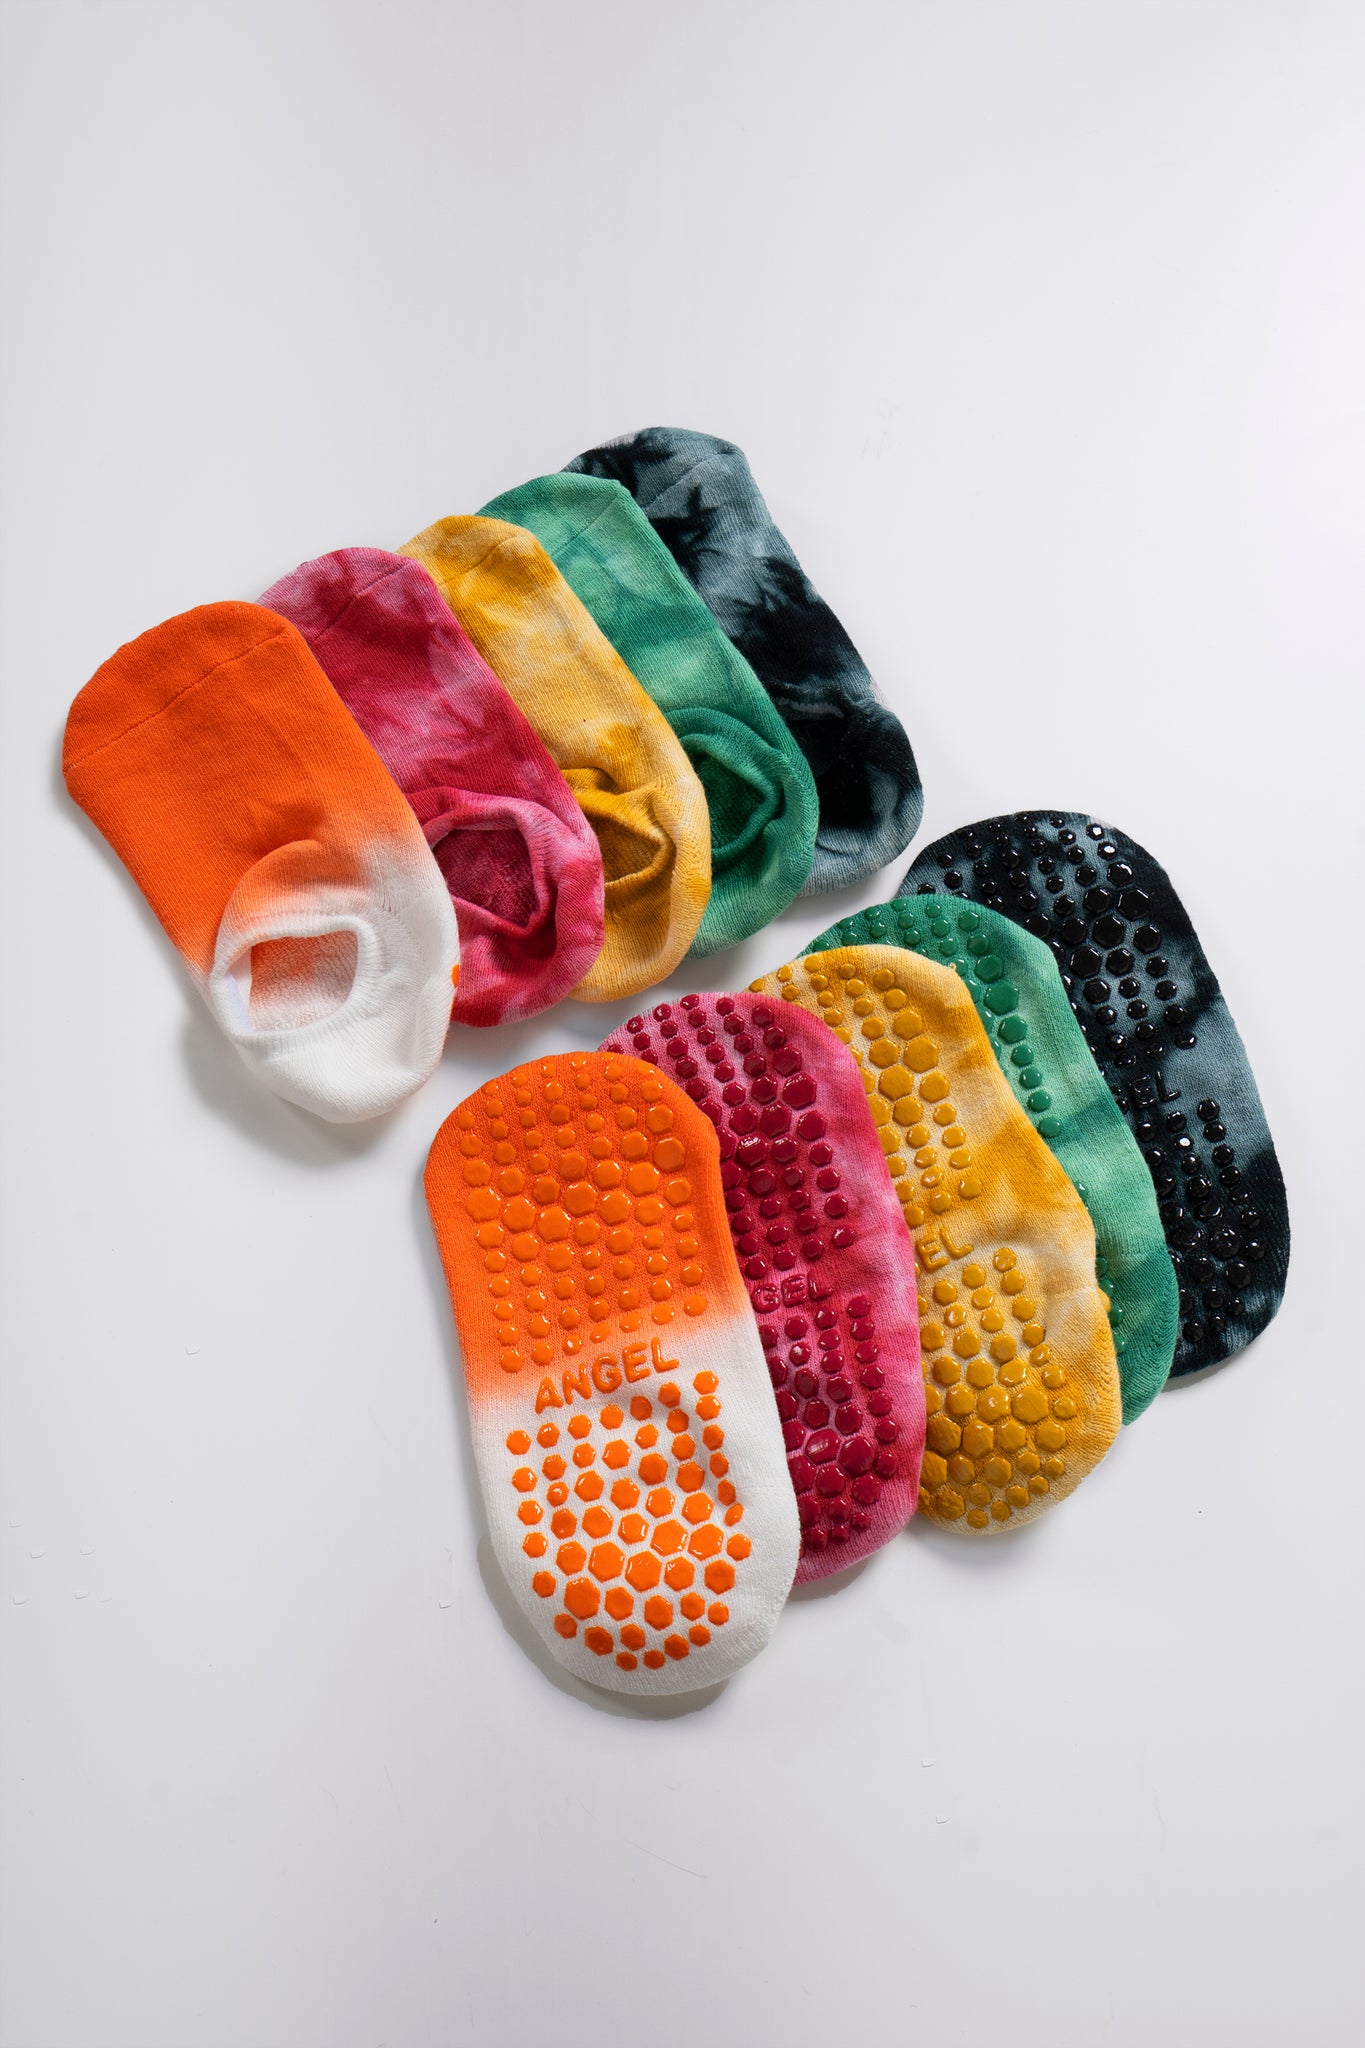 Soar Low Rise Tie-Dye Non Slip Grip Socks (2-Pairs)